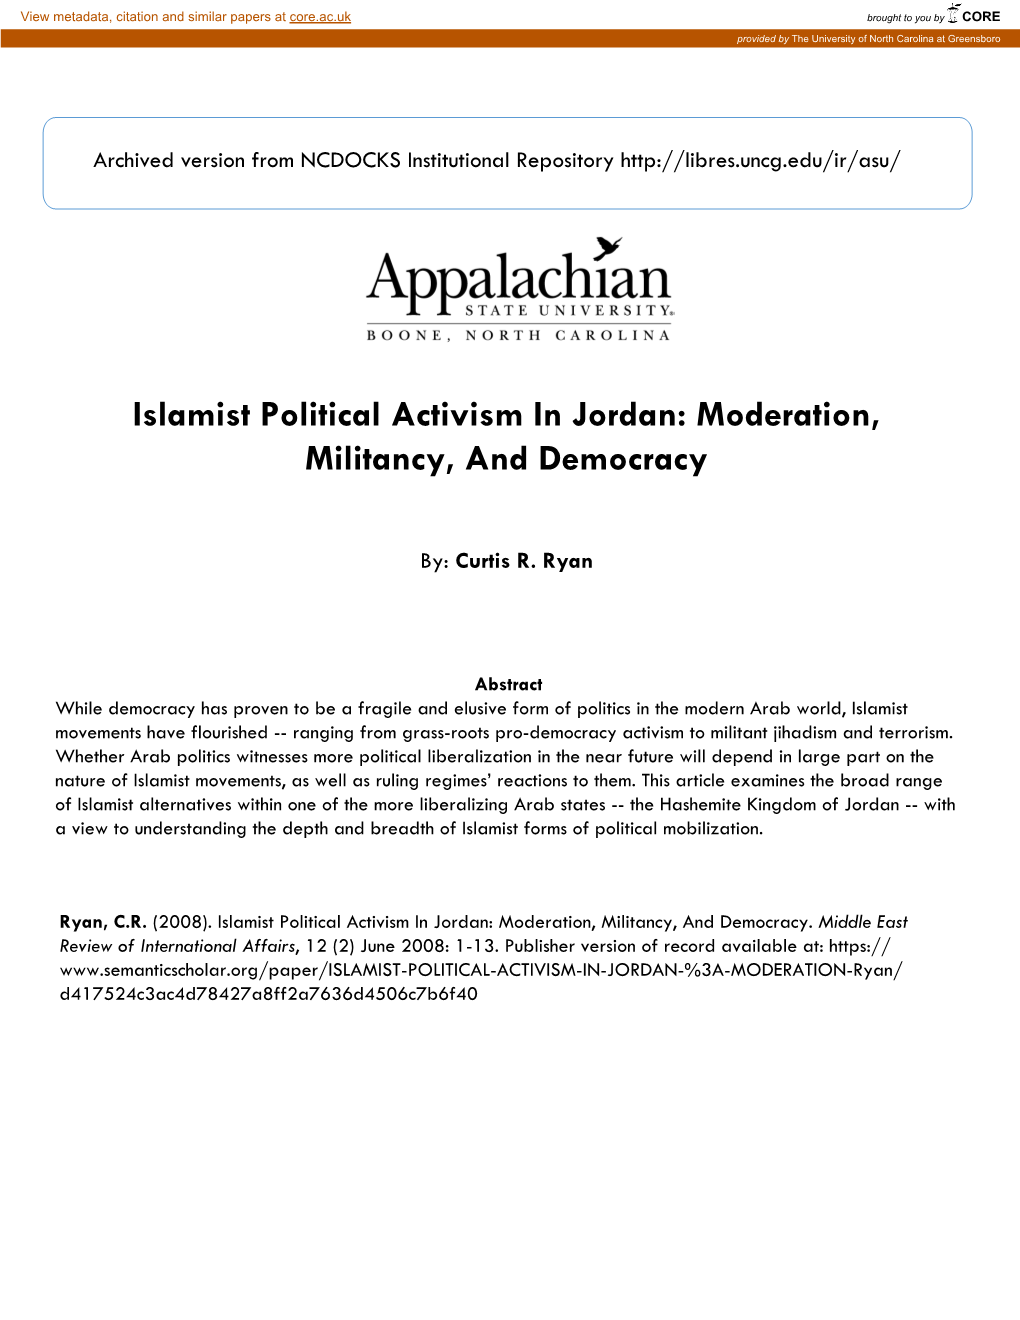 Islamist Political Activism in Jordan: Moderation, Militancy, and Democracy